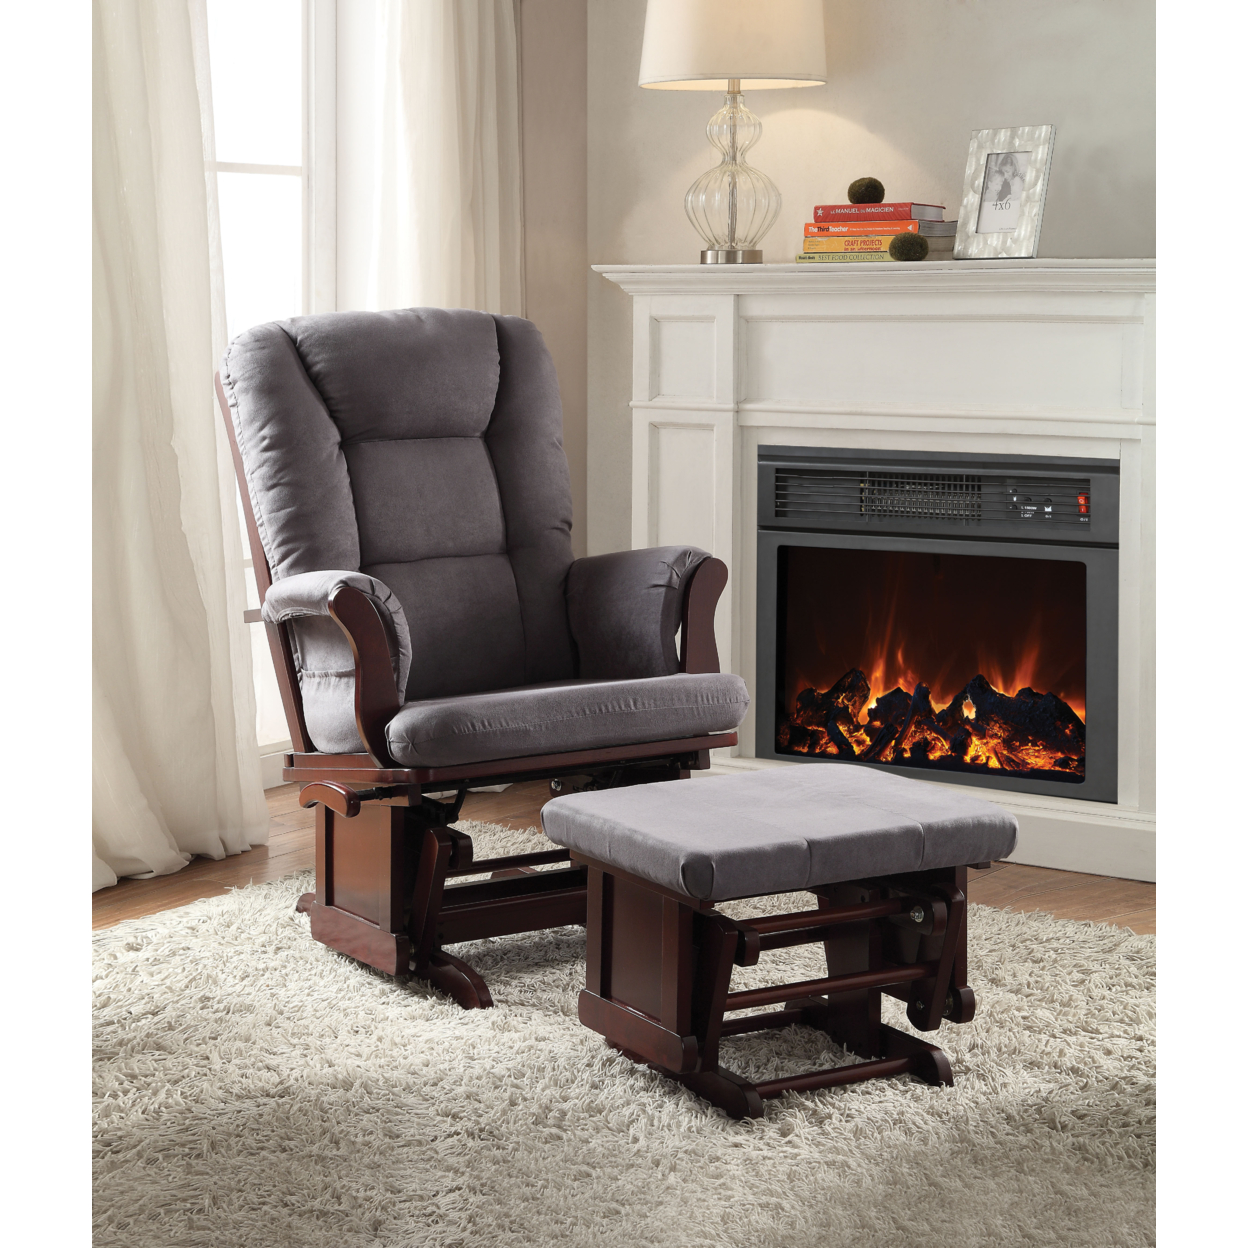 Aeron Glider Chair & Ottoman, 2 Piece Pack Gray & Brown- Saltoro Sherpi